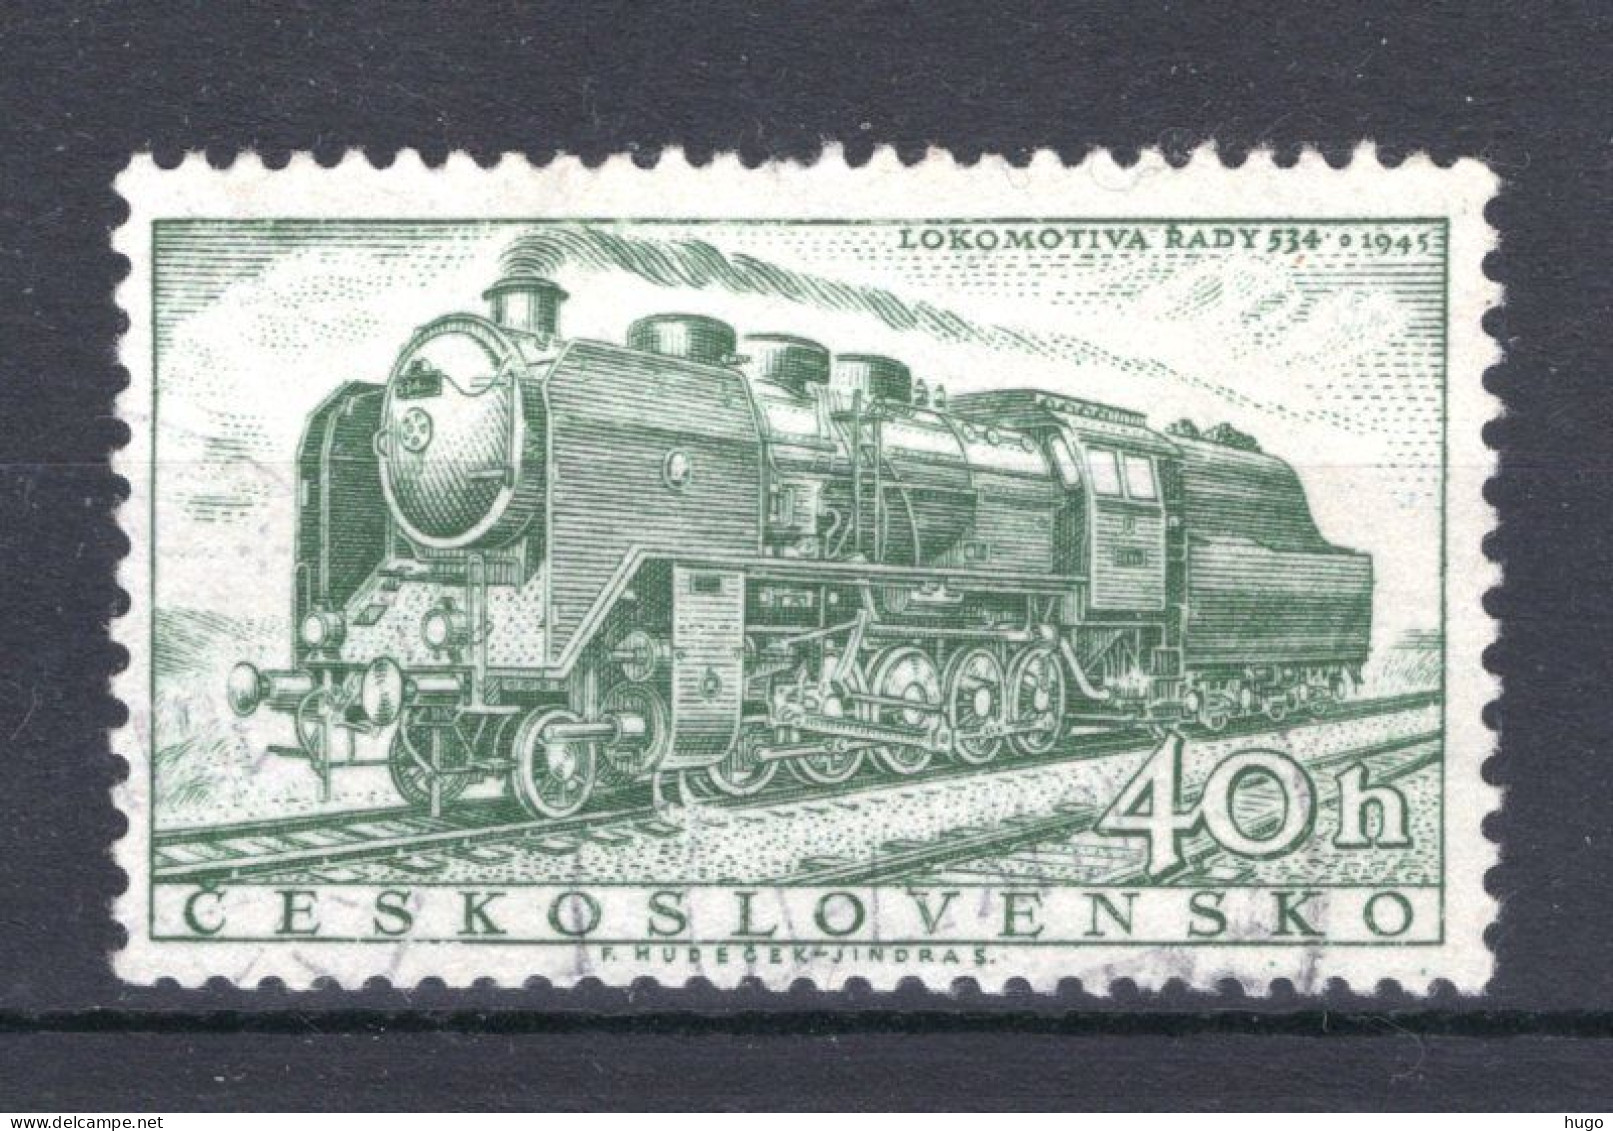 TSJECHOSLOVAKIJE Yt. 877° Gestempeld 1956 - Used Stamps